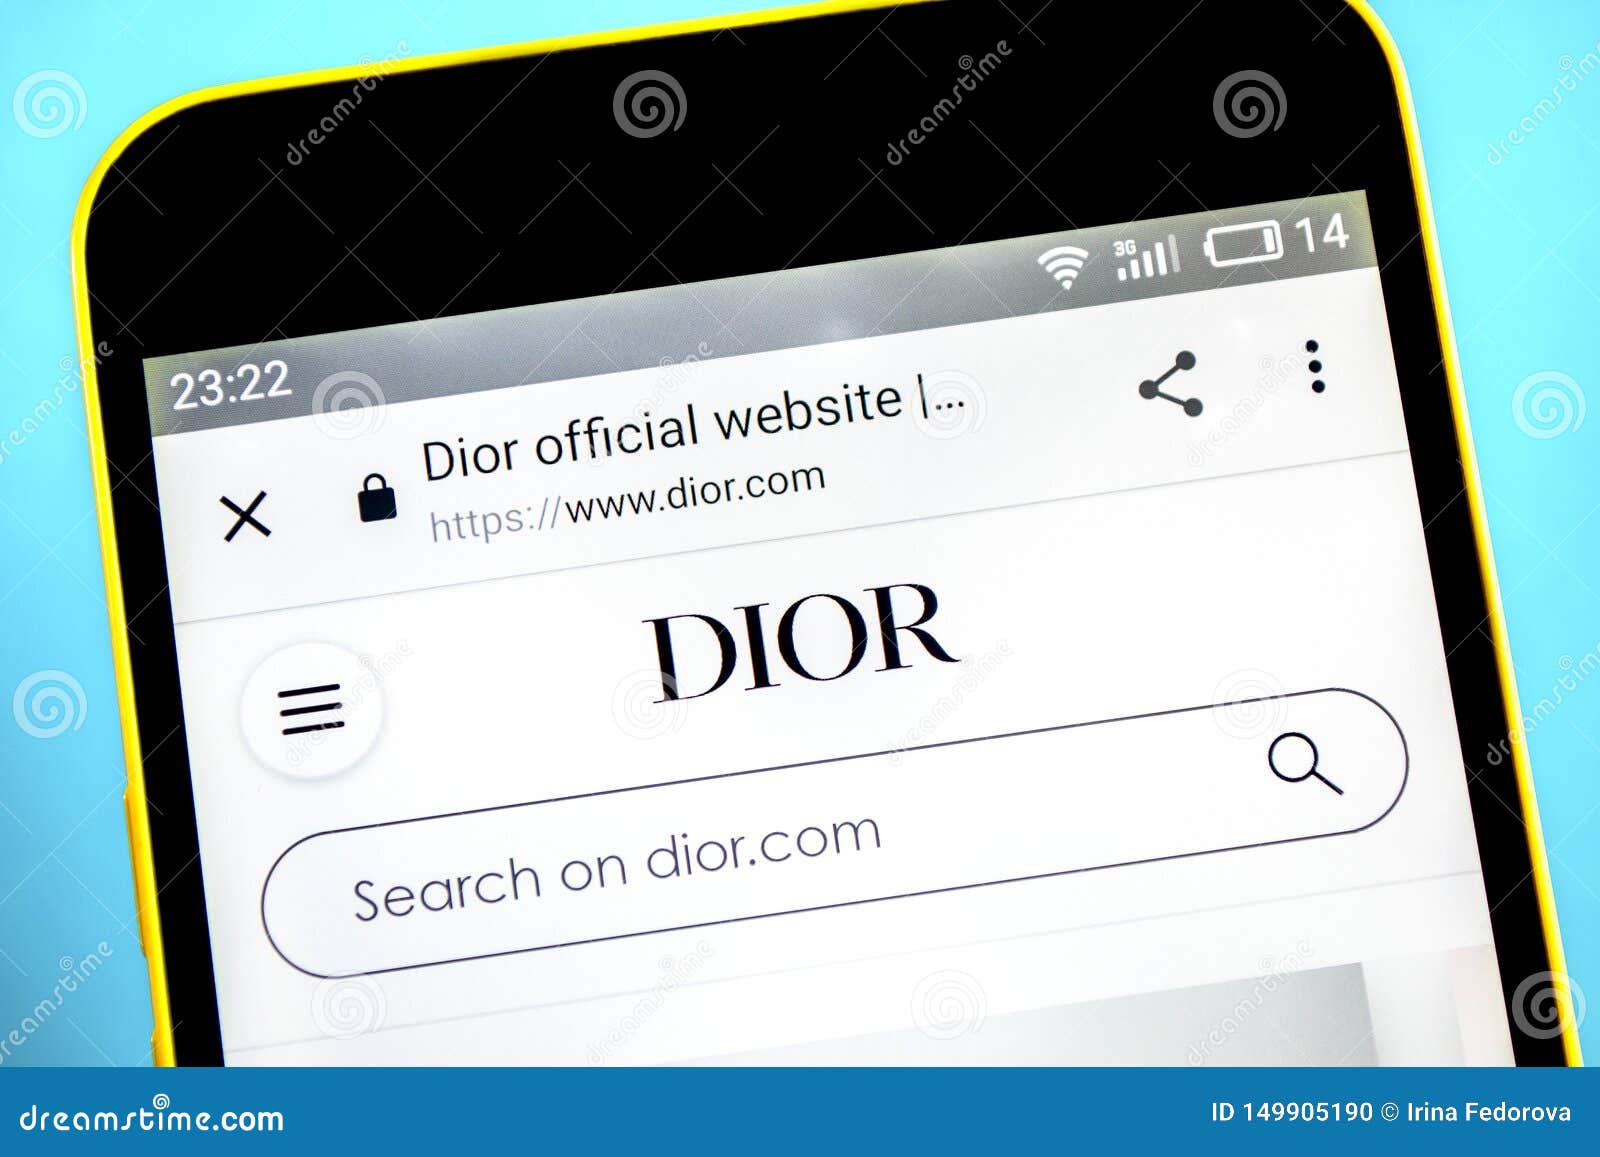 dior english website